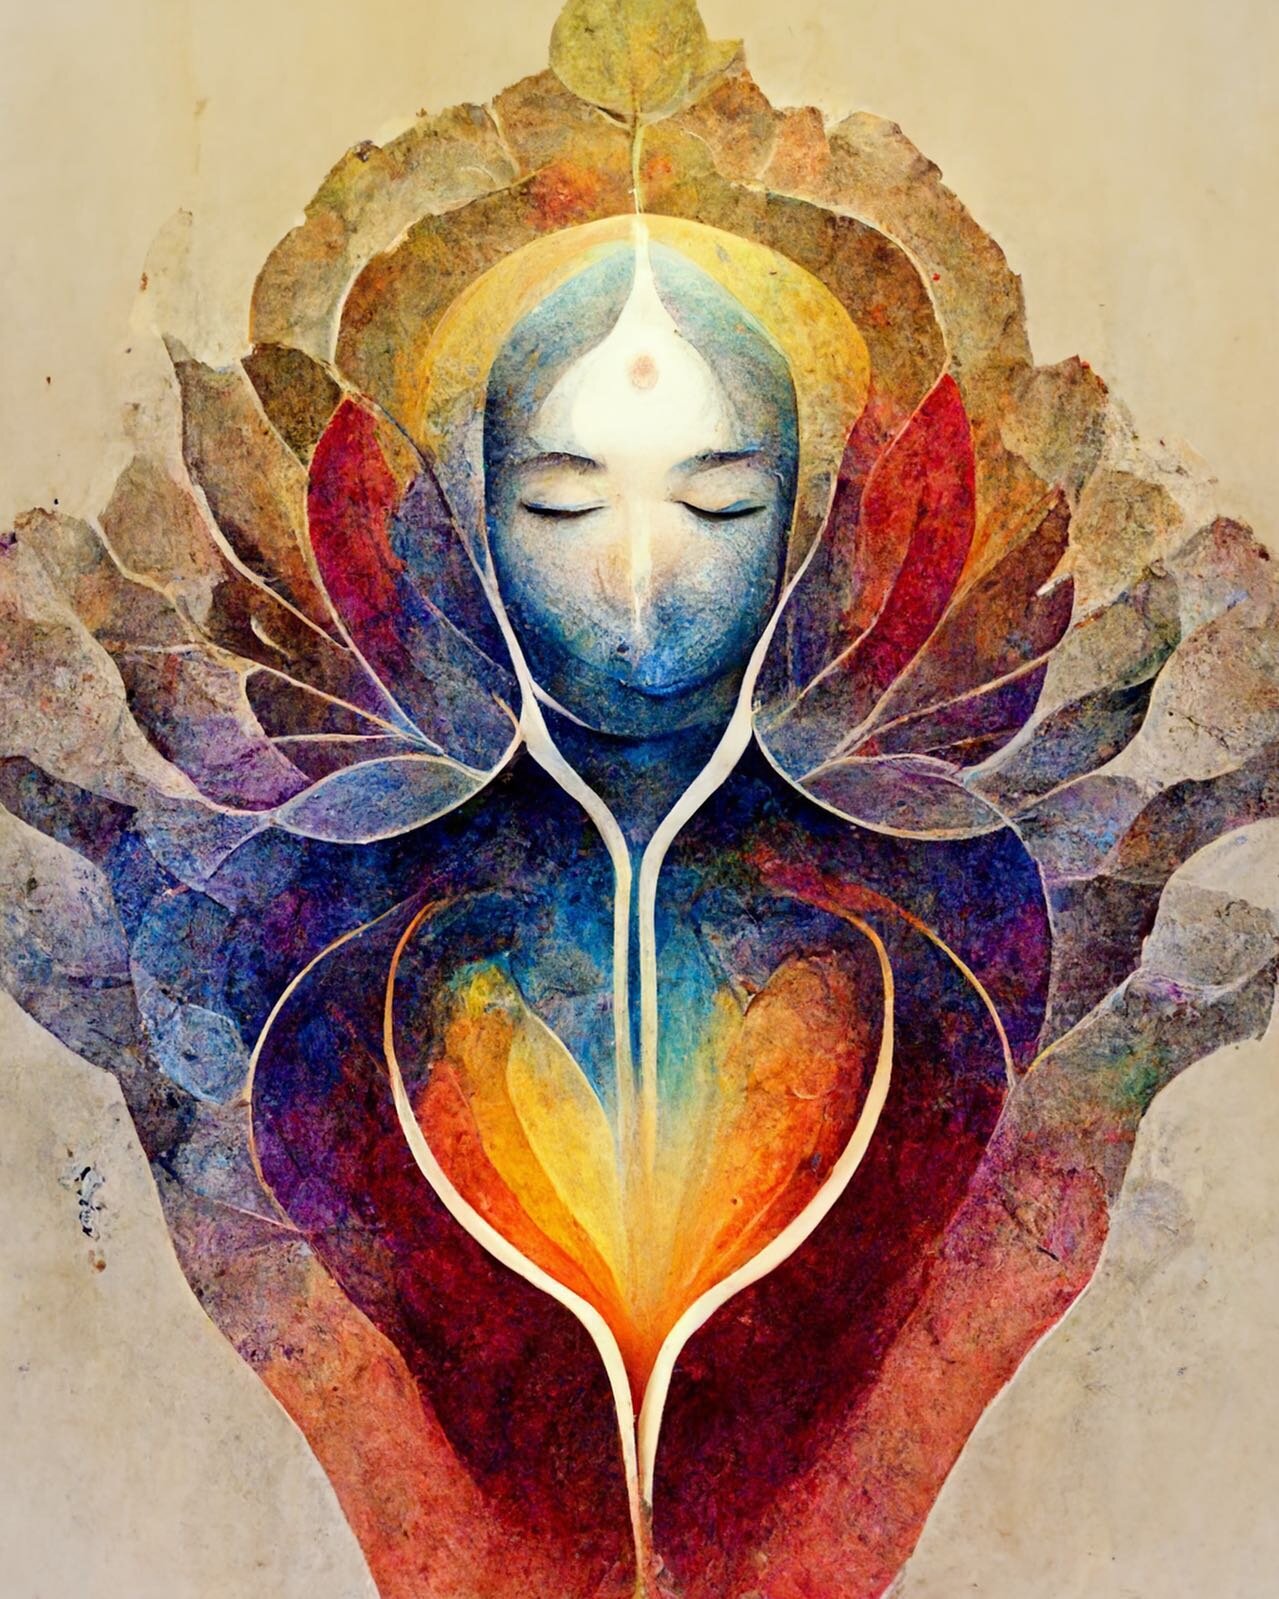 May I open, unfurling layer after layer, petal after petal, blooming to reveal the sacred center&hellip; 🪷
.
.
.
#breath #yoga #meditation #mindfulness #healing #opening #spiritual #awakening #midjourney #digitalart #aiart #midjourneyart #artoftheda